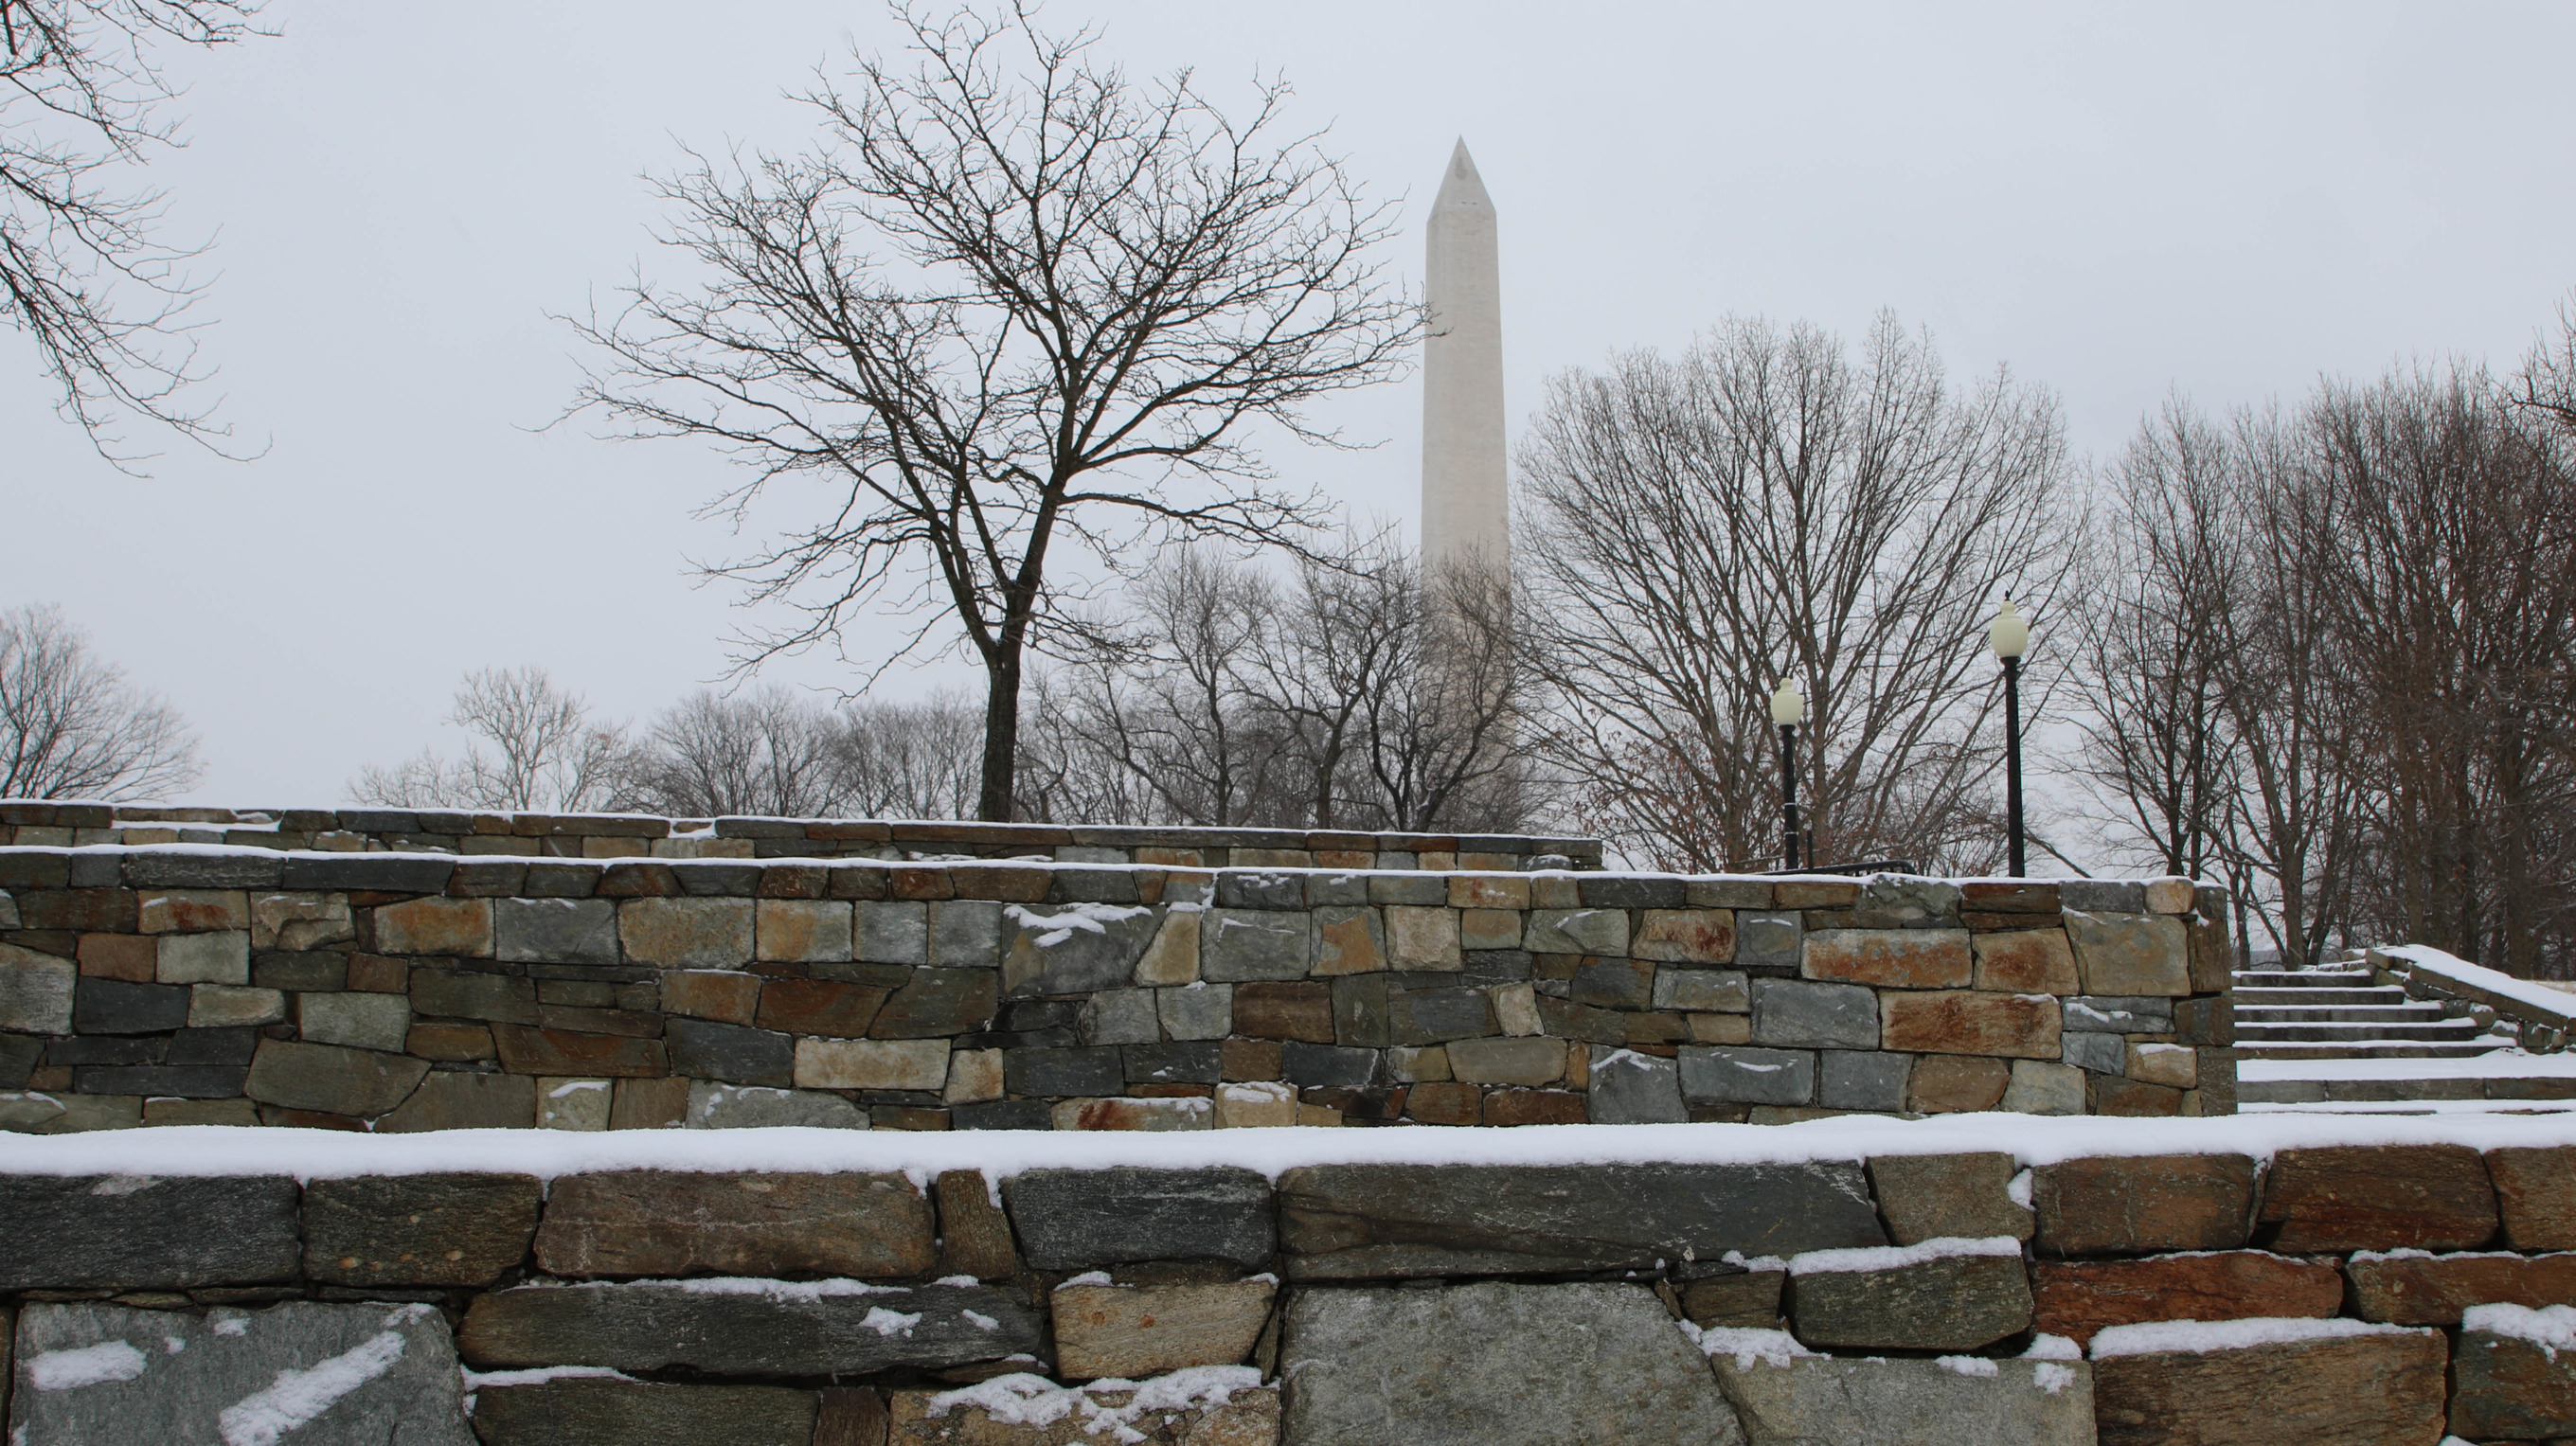 Washington Monument behind several snow-covered stone walls